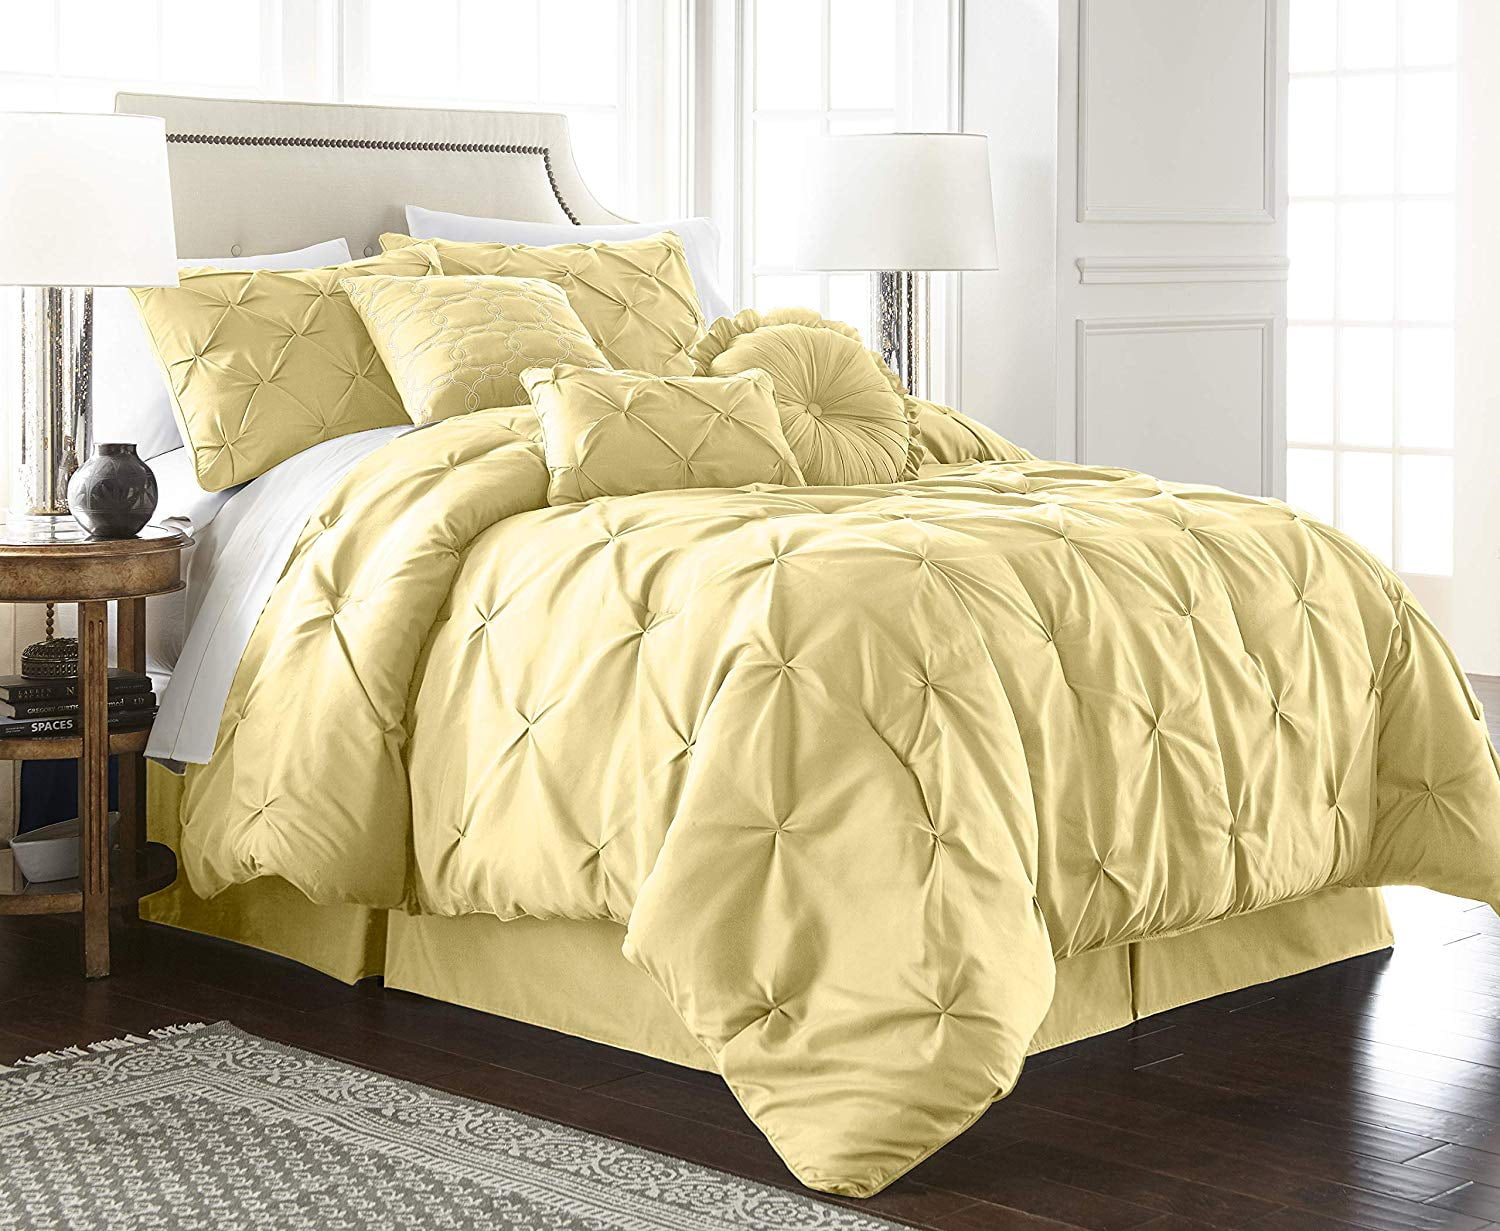 Comforter Bedding Set 7 Pc Animal Print Design Brown Yellow Shams Bedskirt Soft 